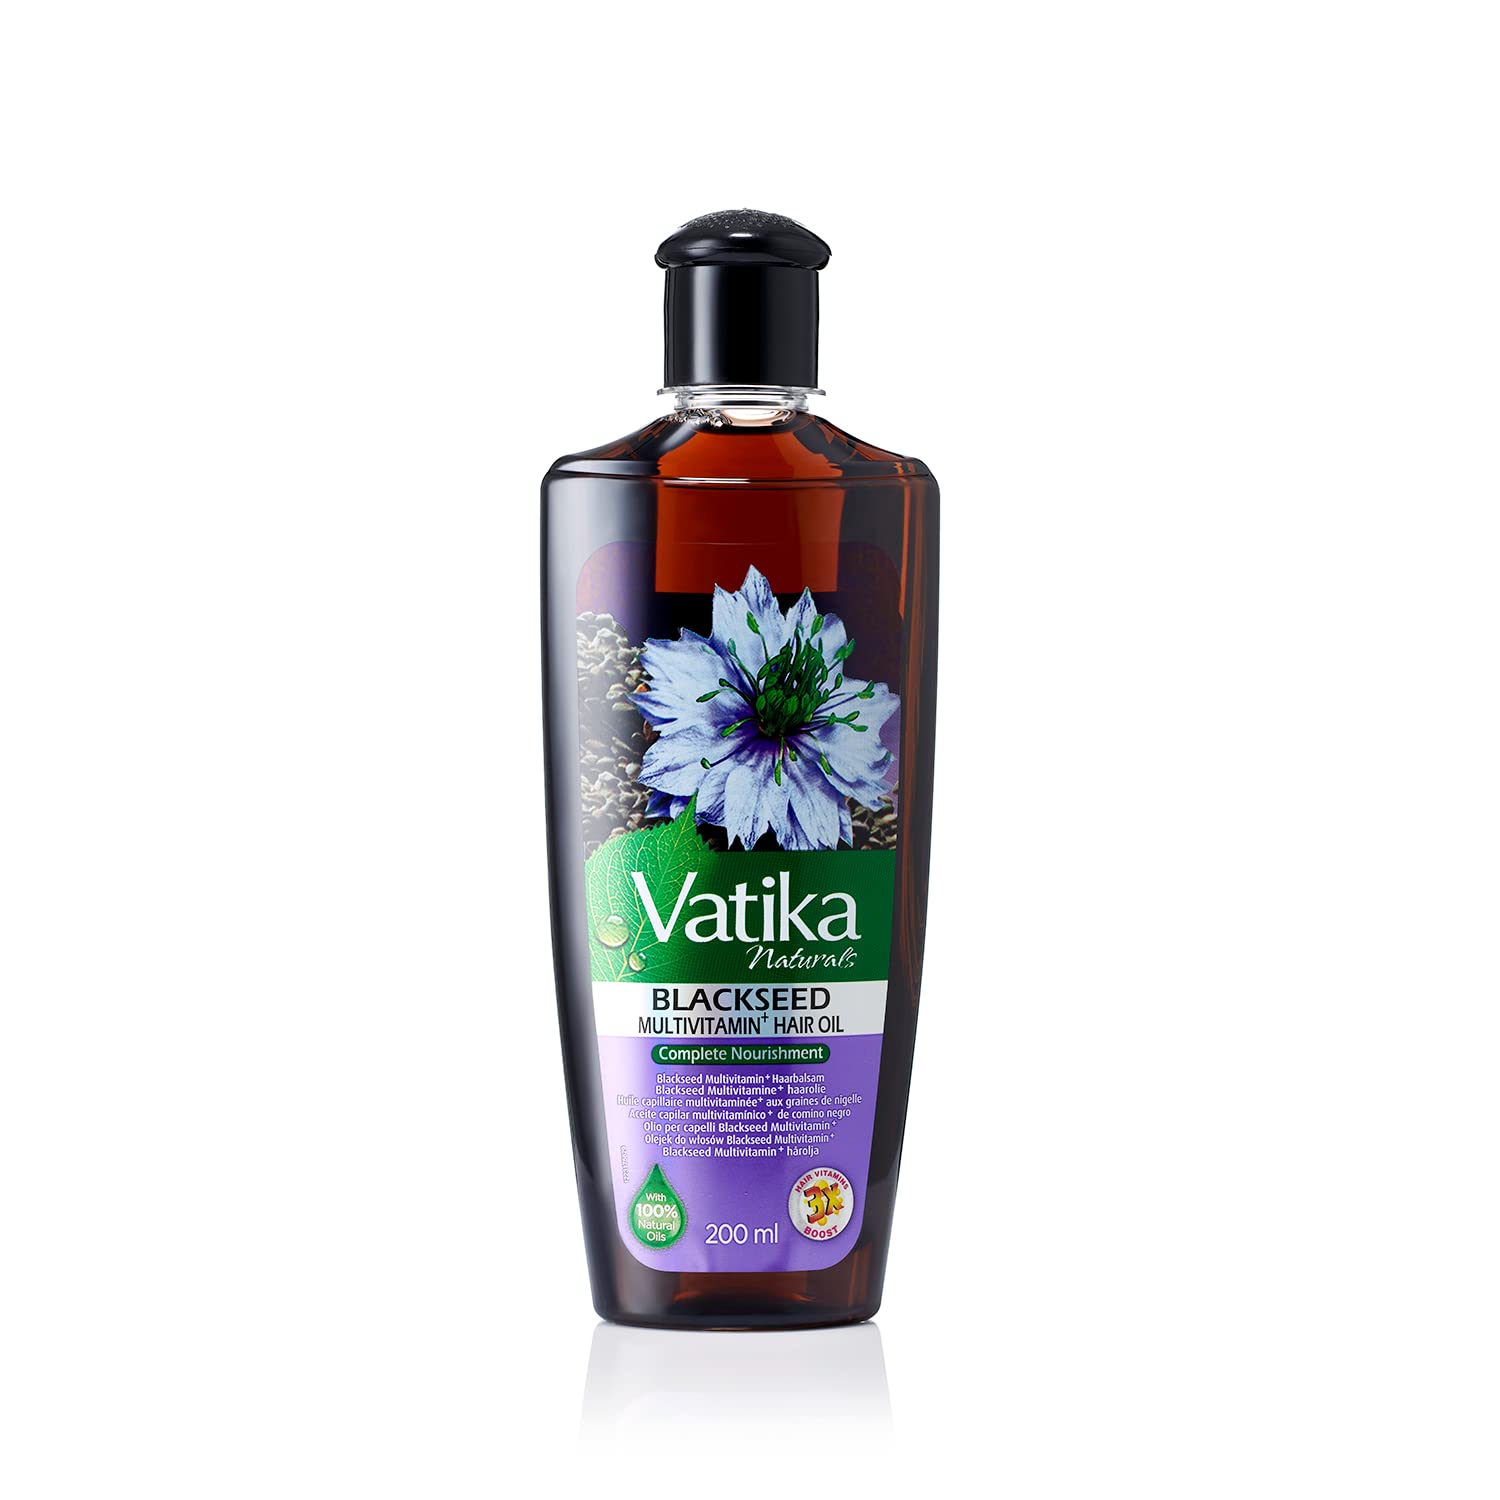 Vatika Enriched Black Seed Hair Oil